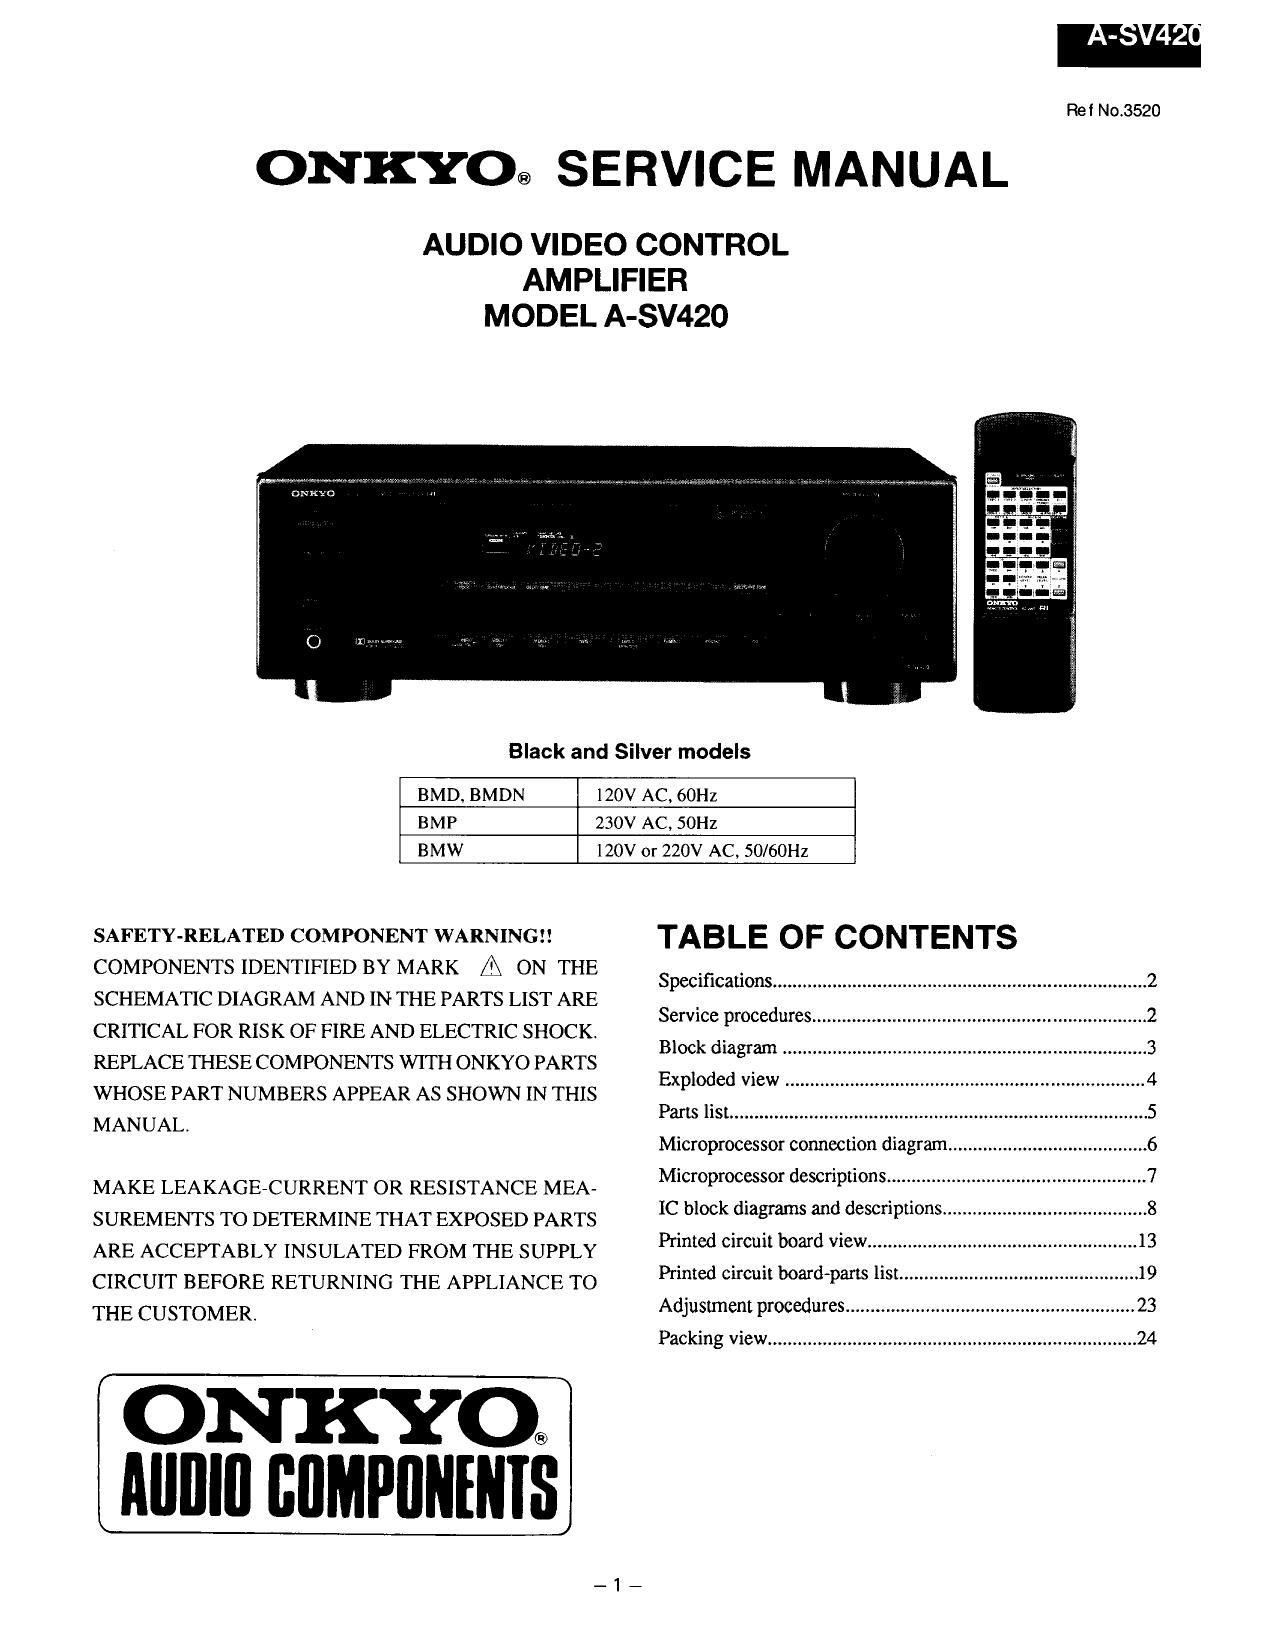 Onkyo ASV 420 Service Manual